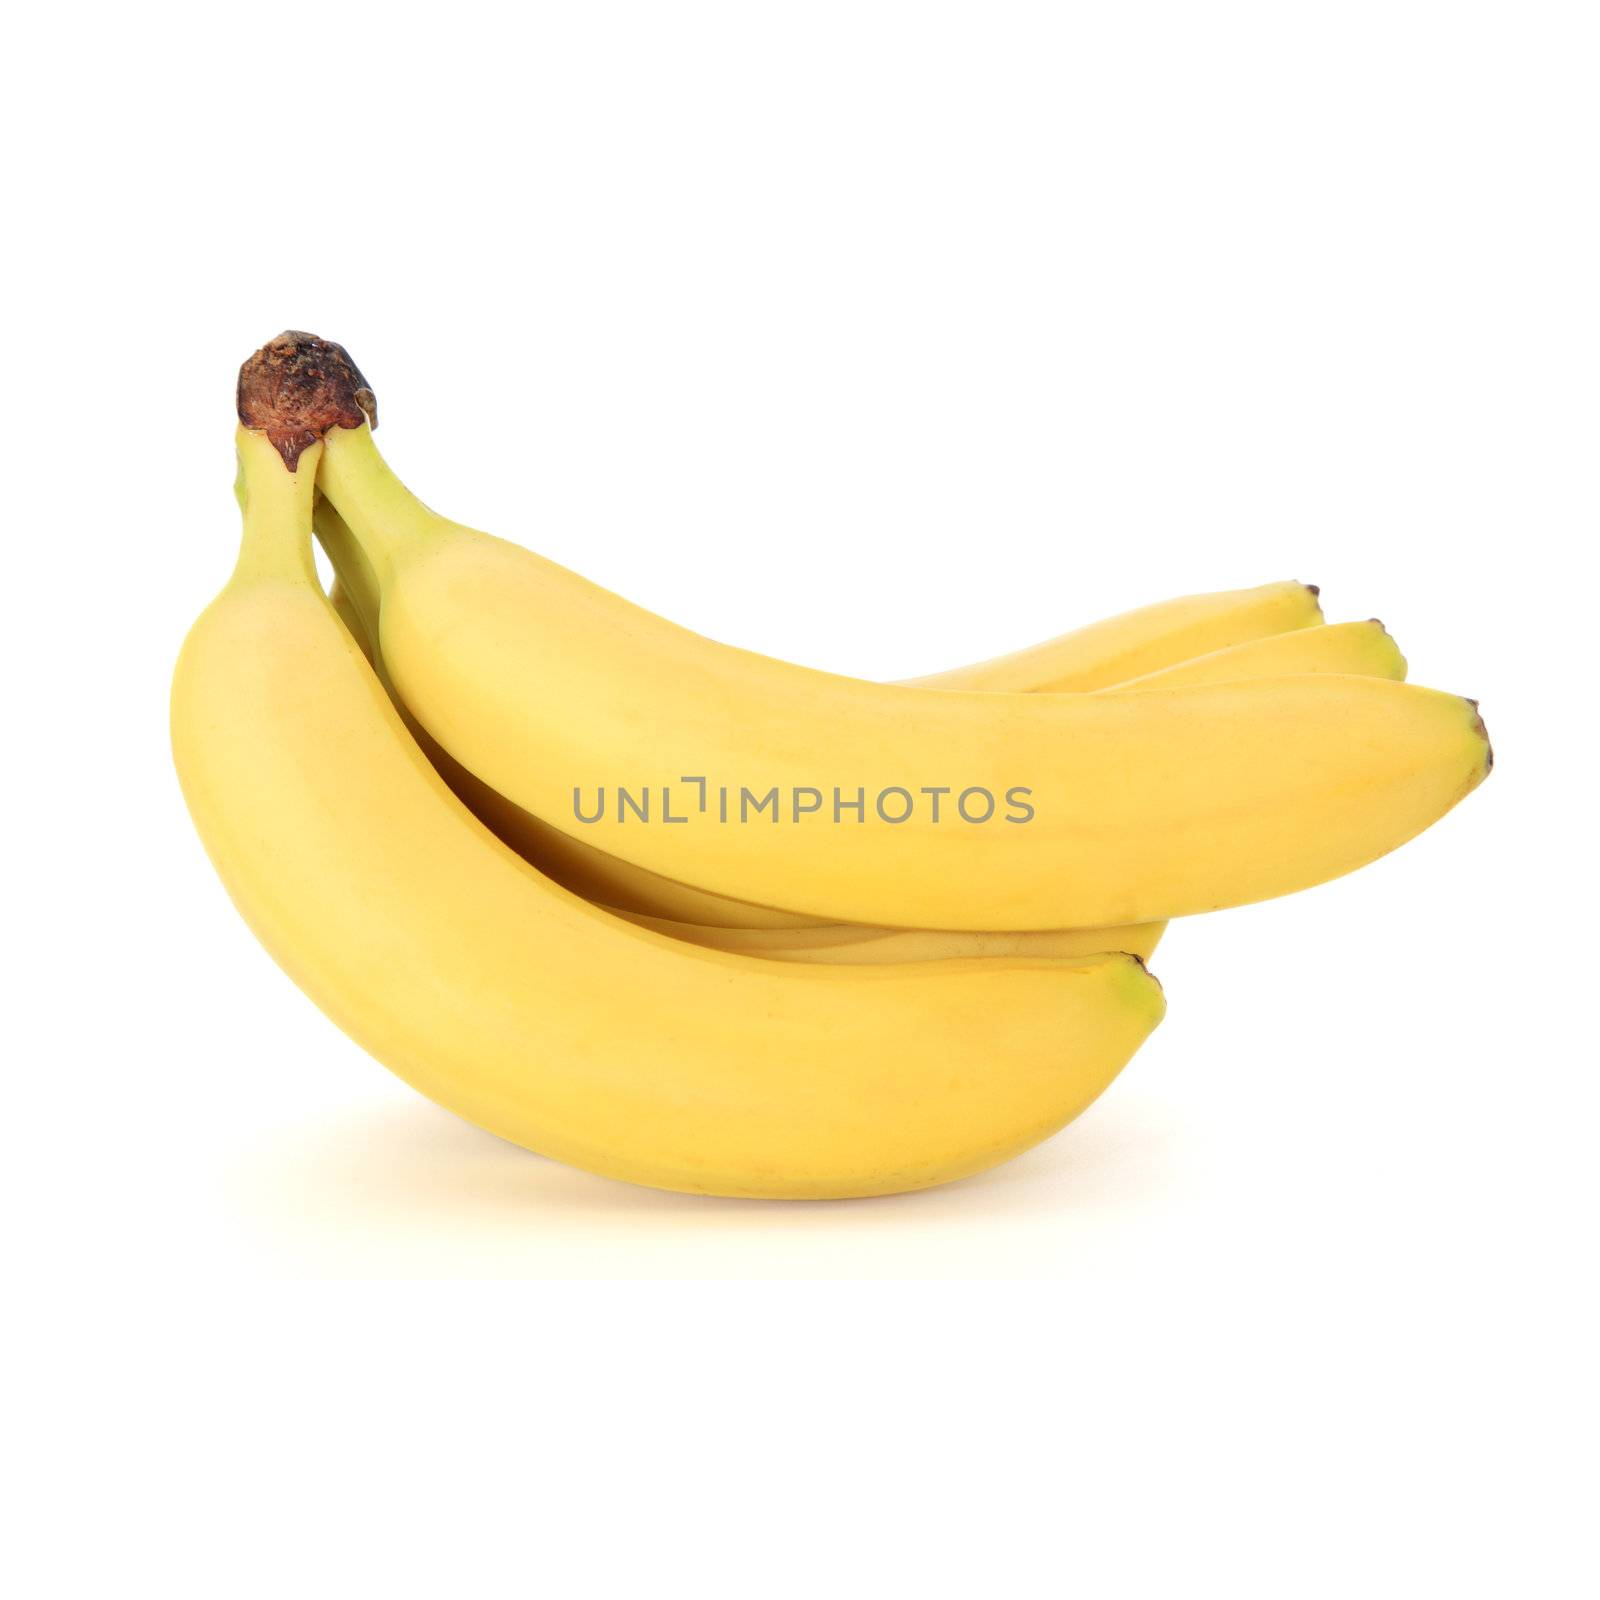 Banana by kaarsten